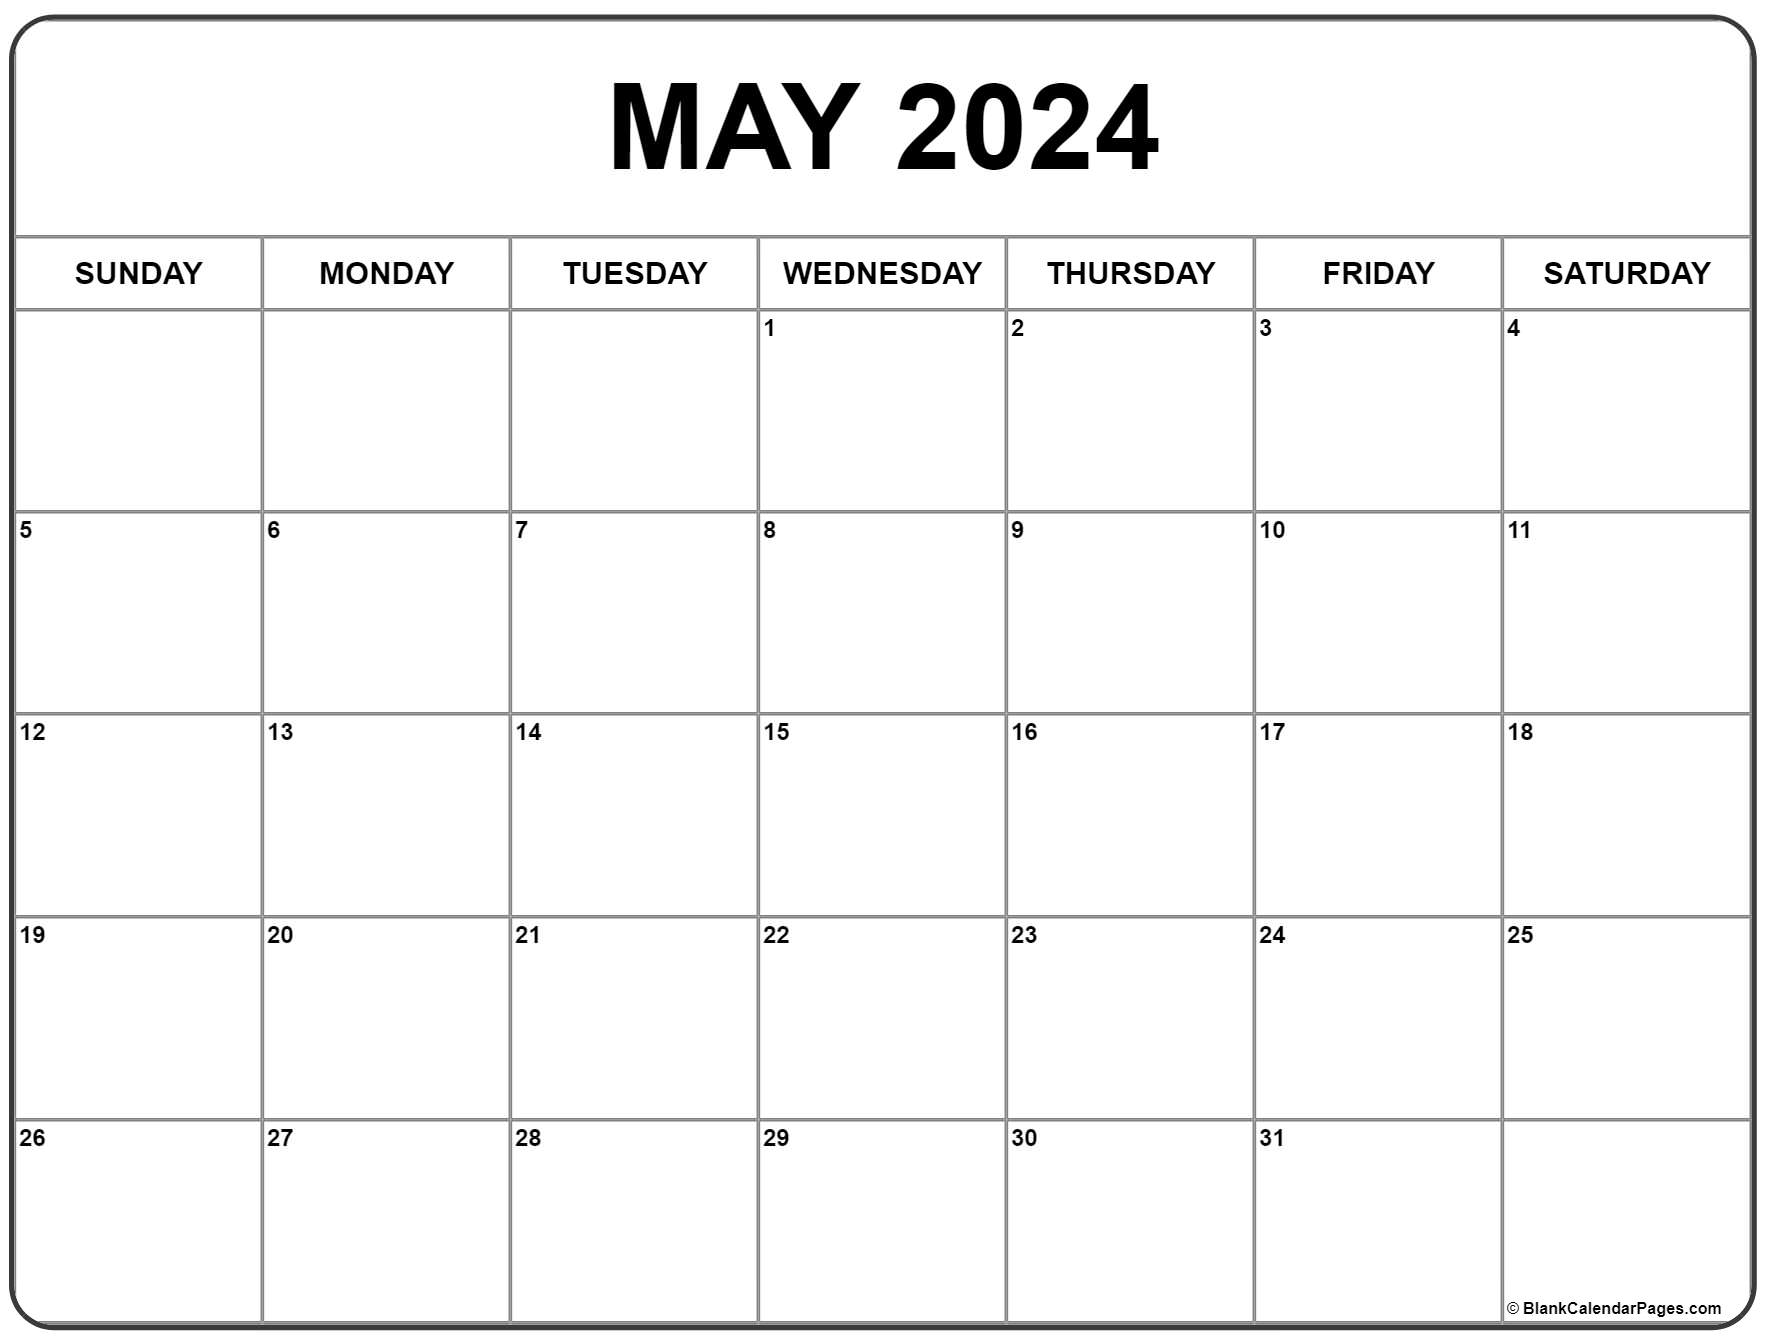 May 2024 Calendar | Free Printable Calendar for Free Printable Monthly Calendar 2024 May